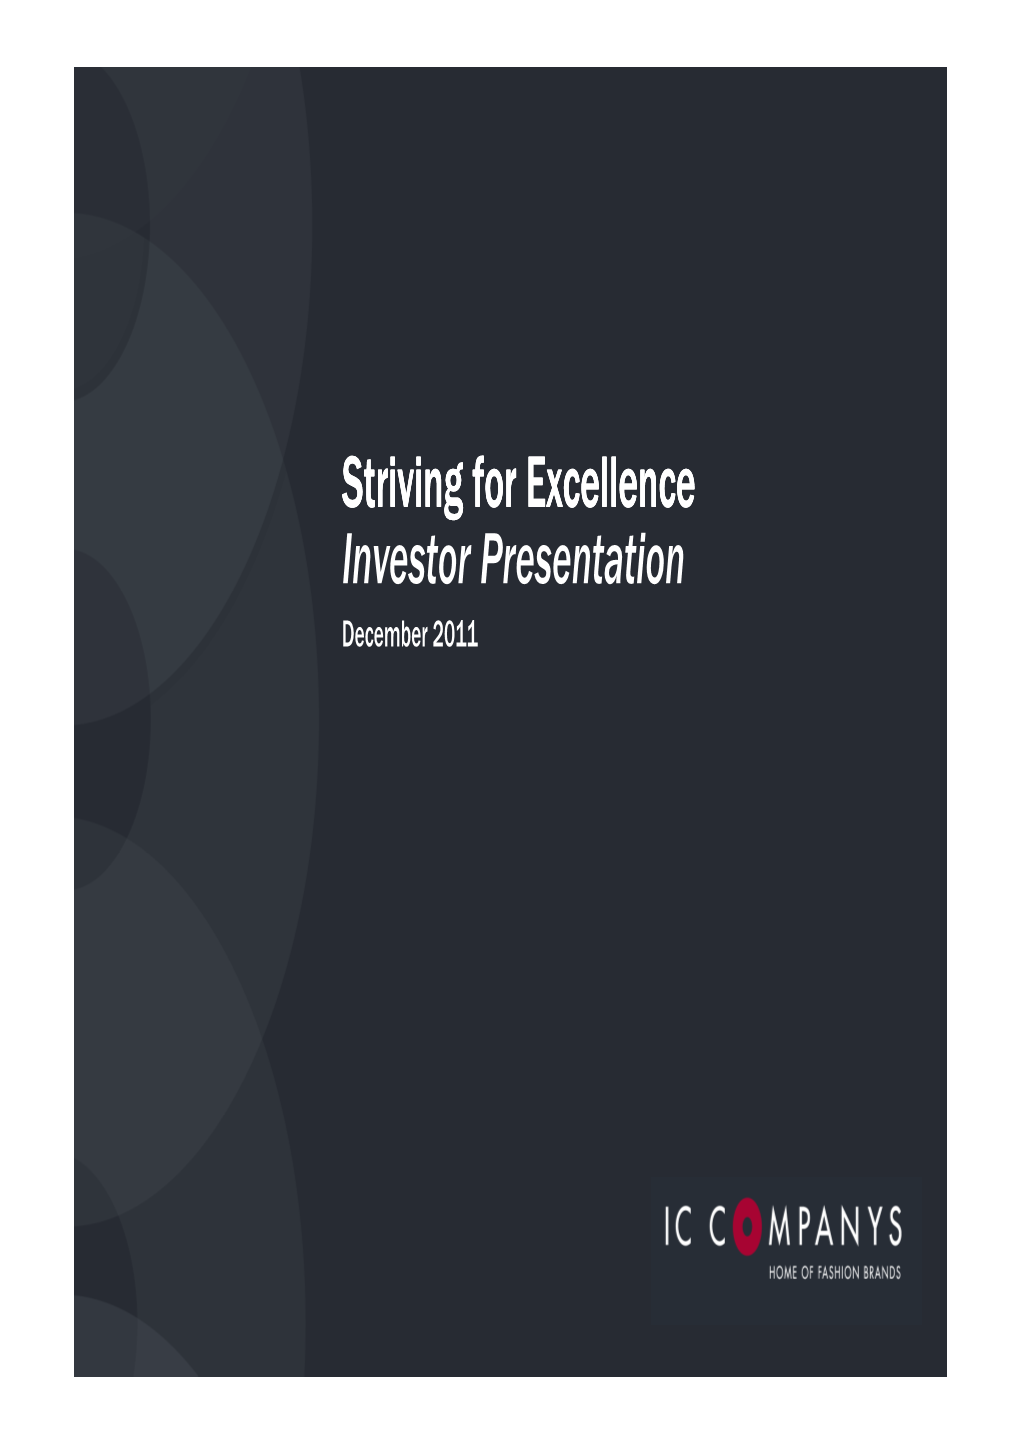 Striving for Excellence Investor Presentation December 2011 Contents